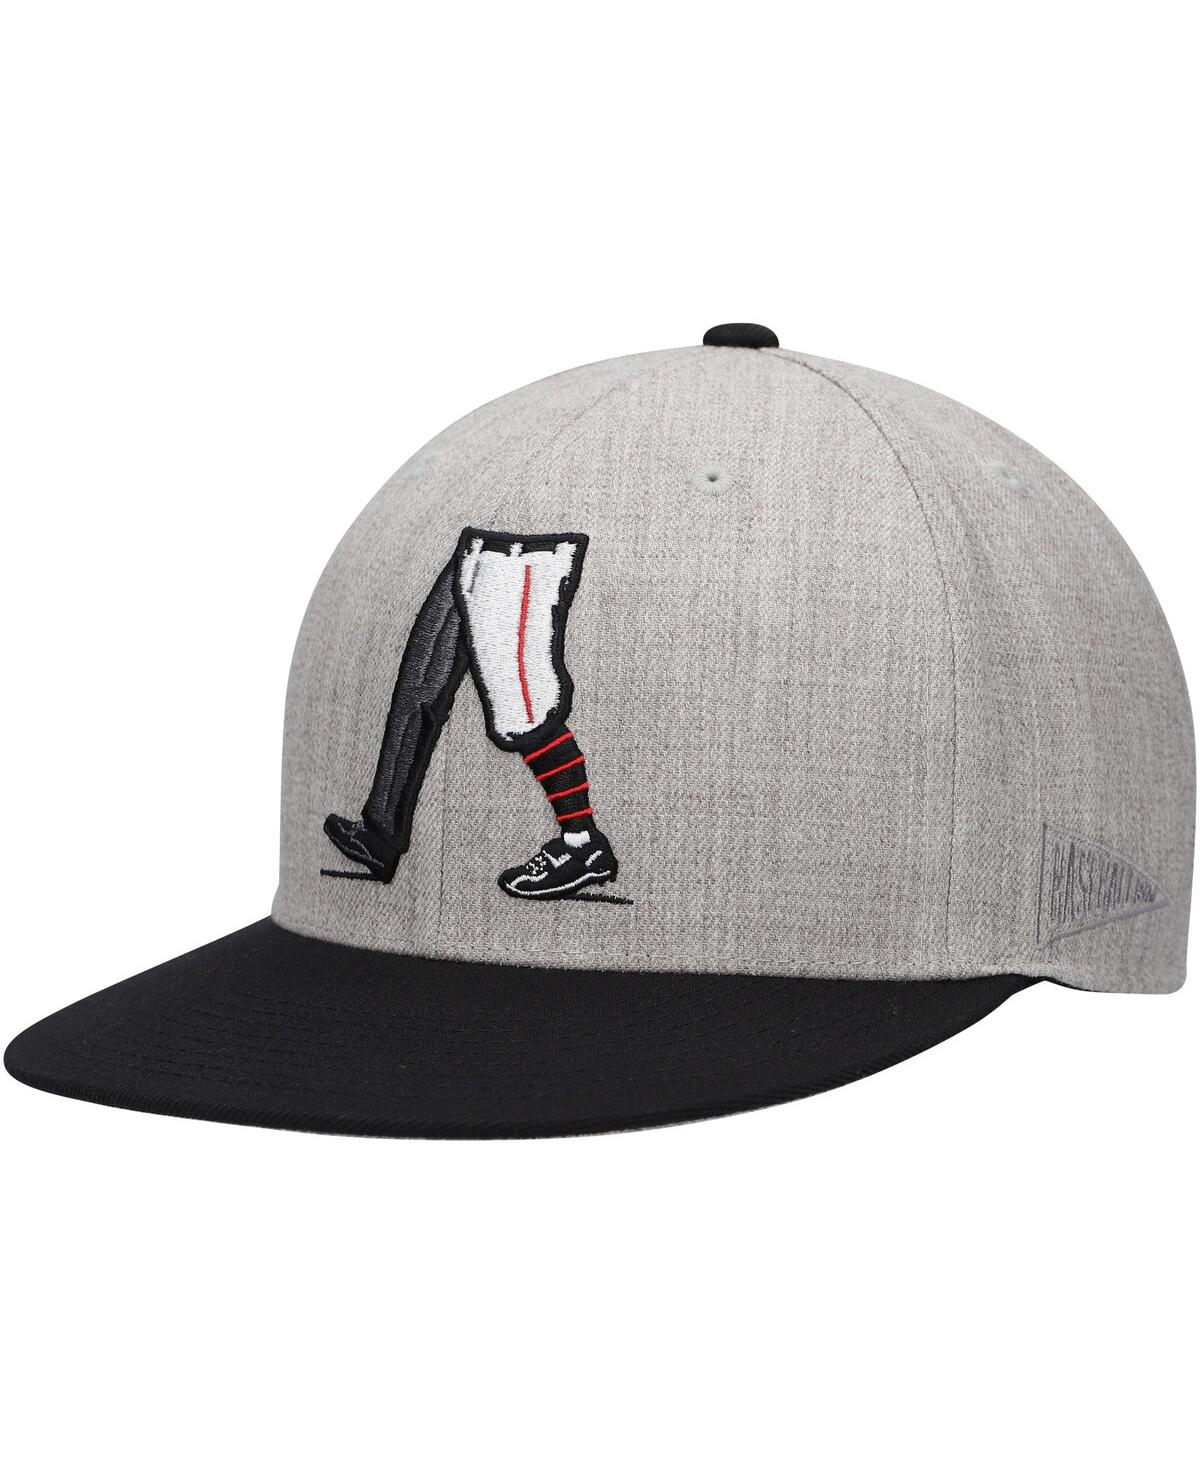 Shop Baseballism Men's  Heather Gray Field Of Dreams Moonlight Snapback Hat